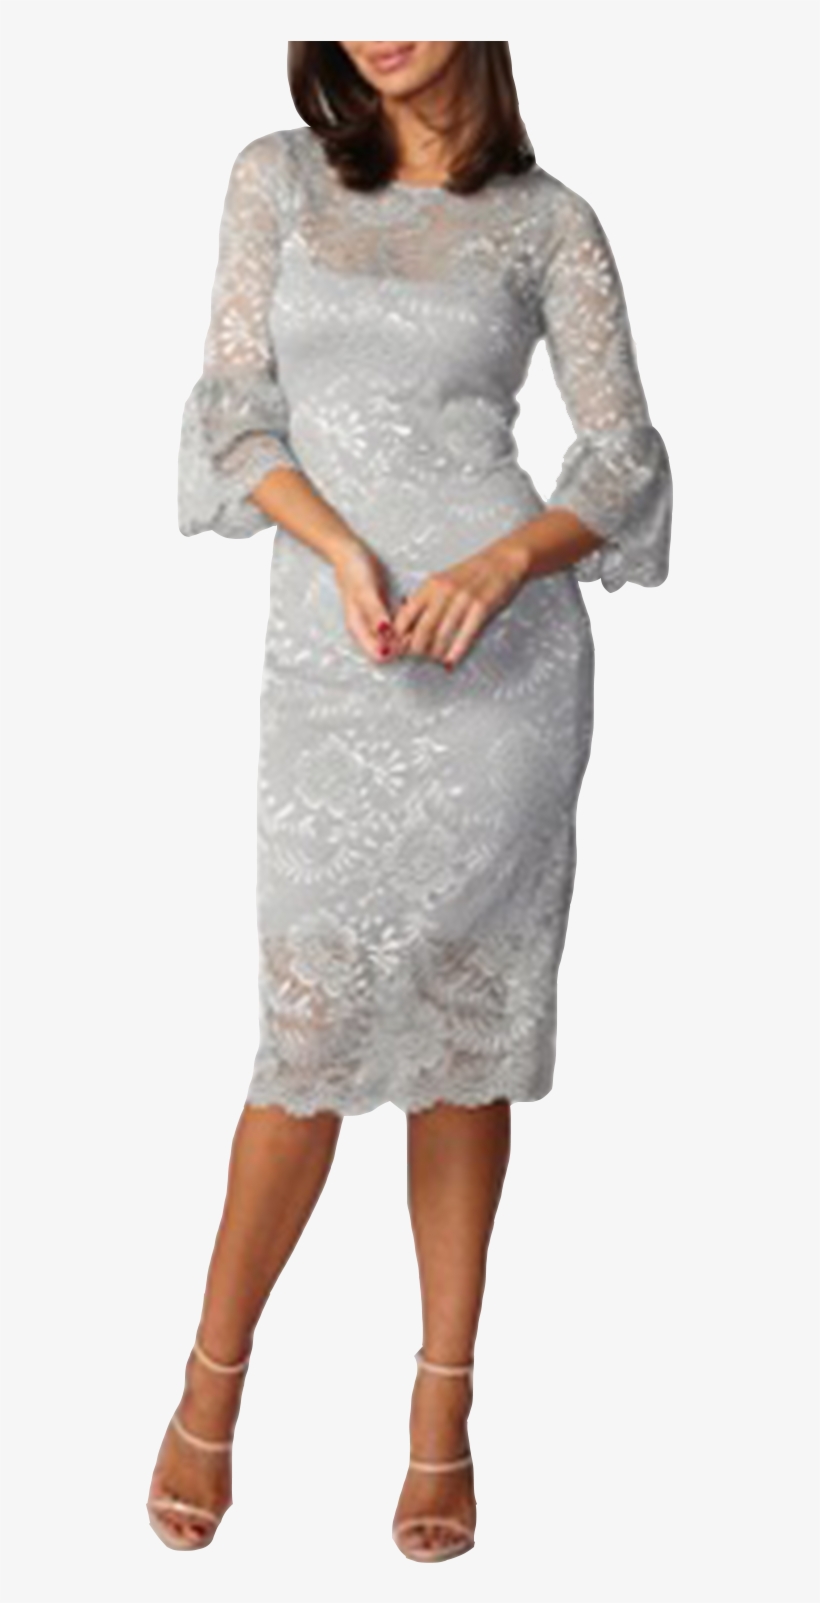 Viena Dress - Cocktail Dress, transparent png #8239549